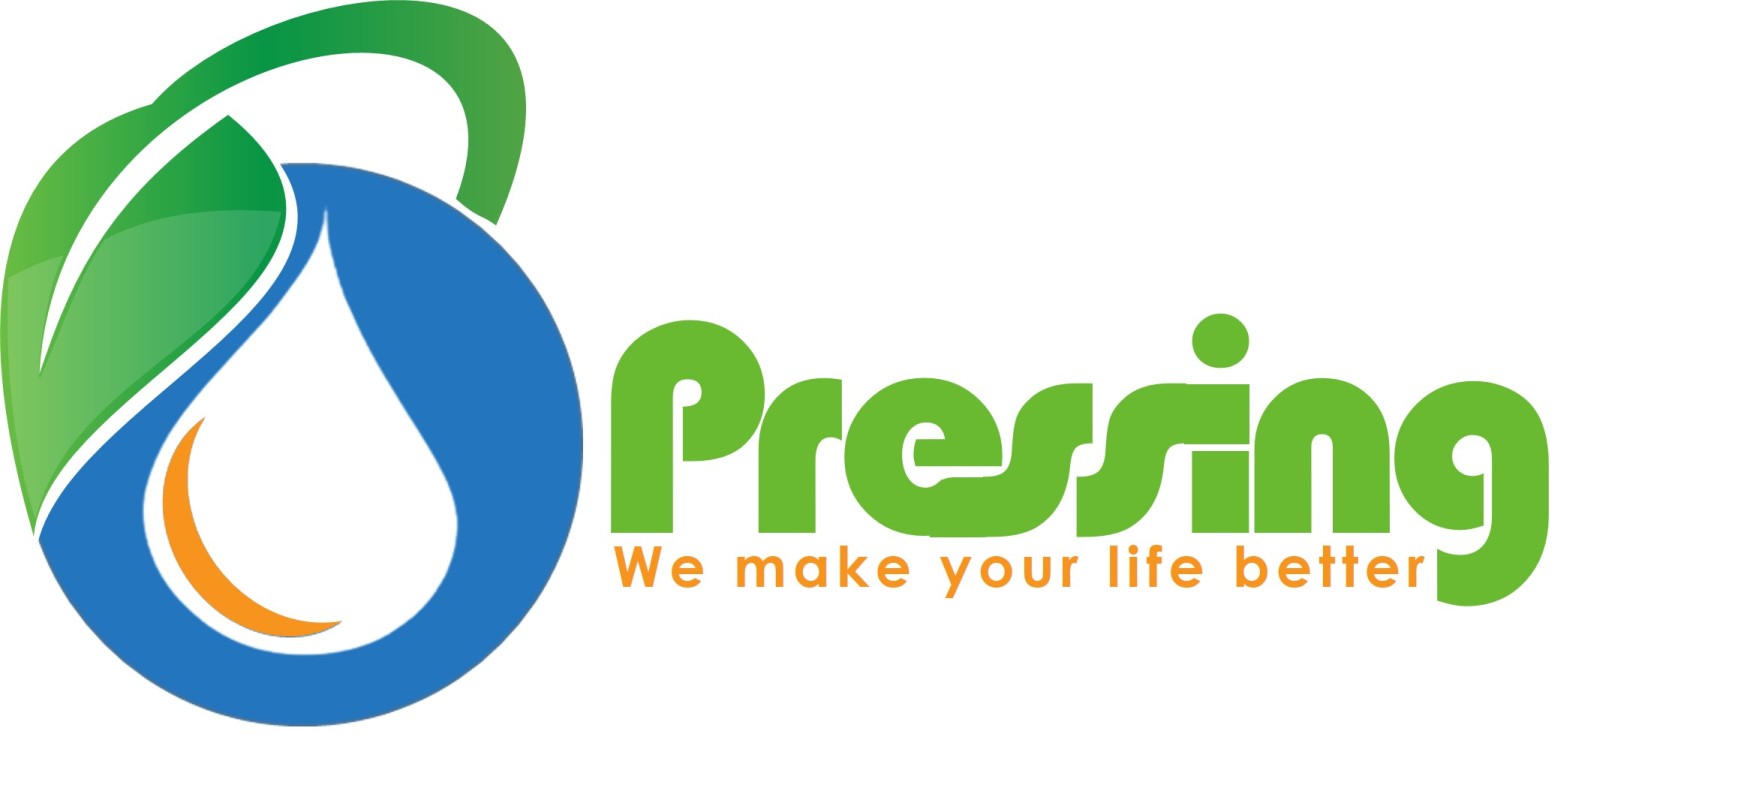 Ô Pressing Logo